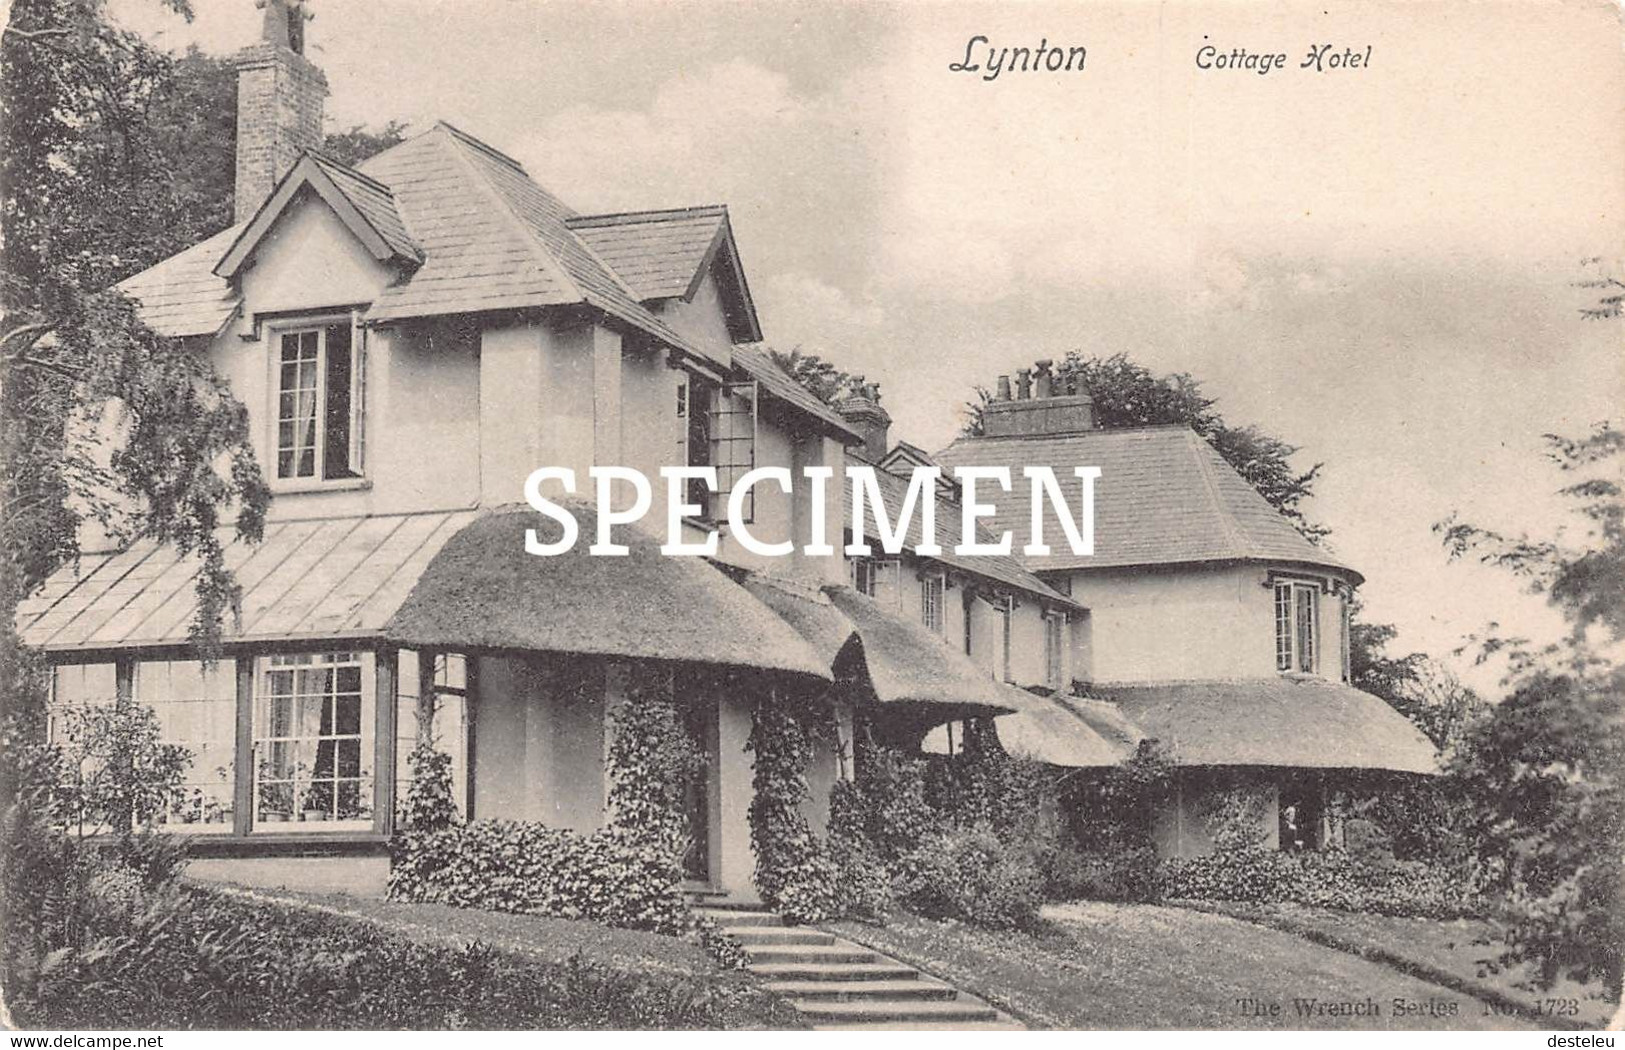 Cottage Hotel - Lynton - Lynmouth & Lynton